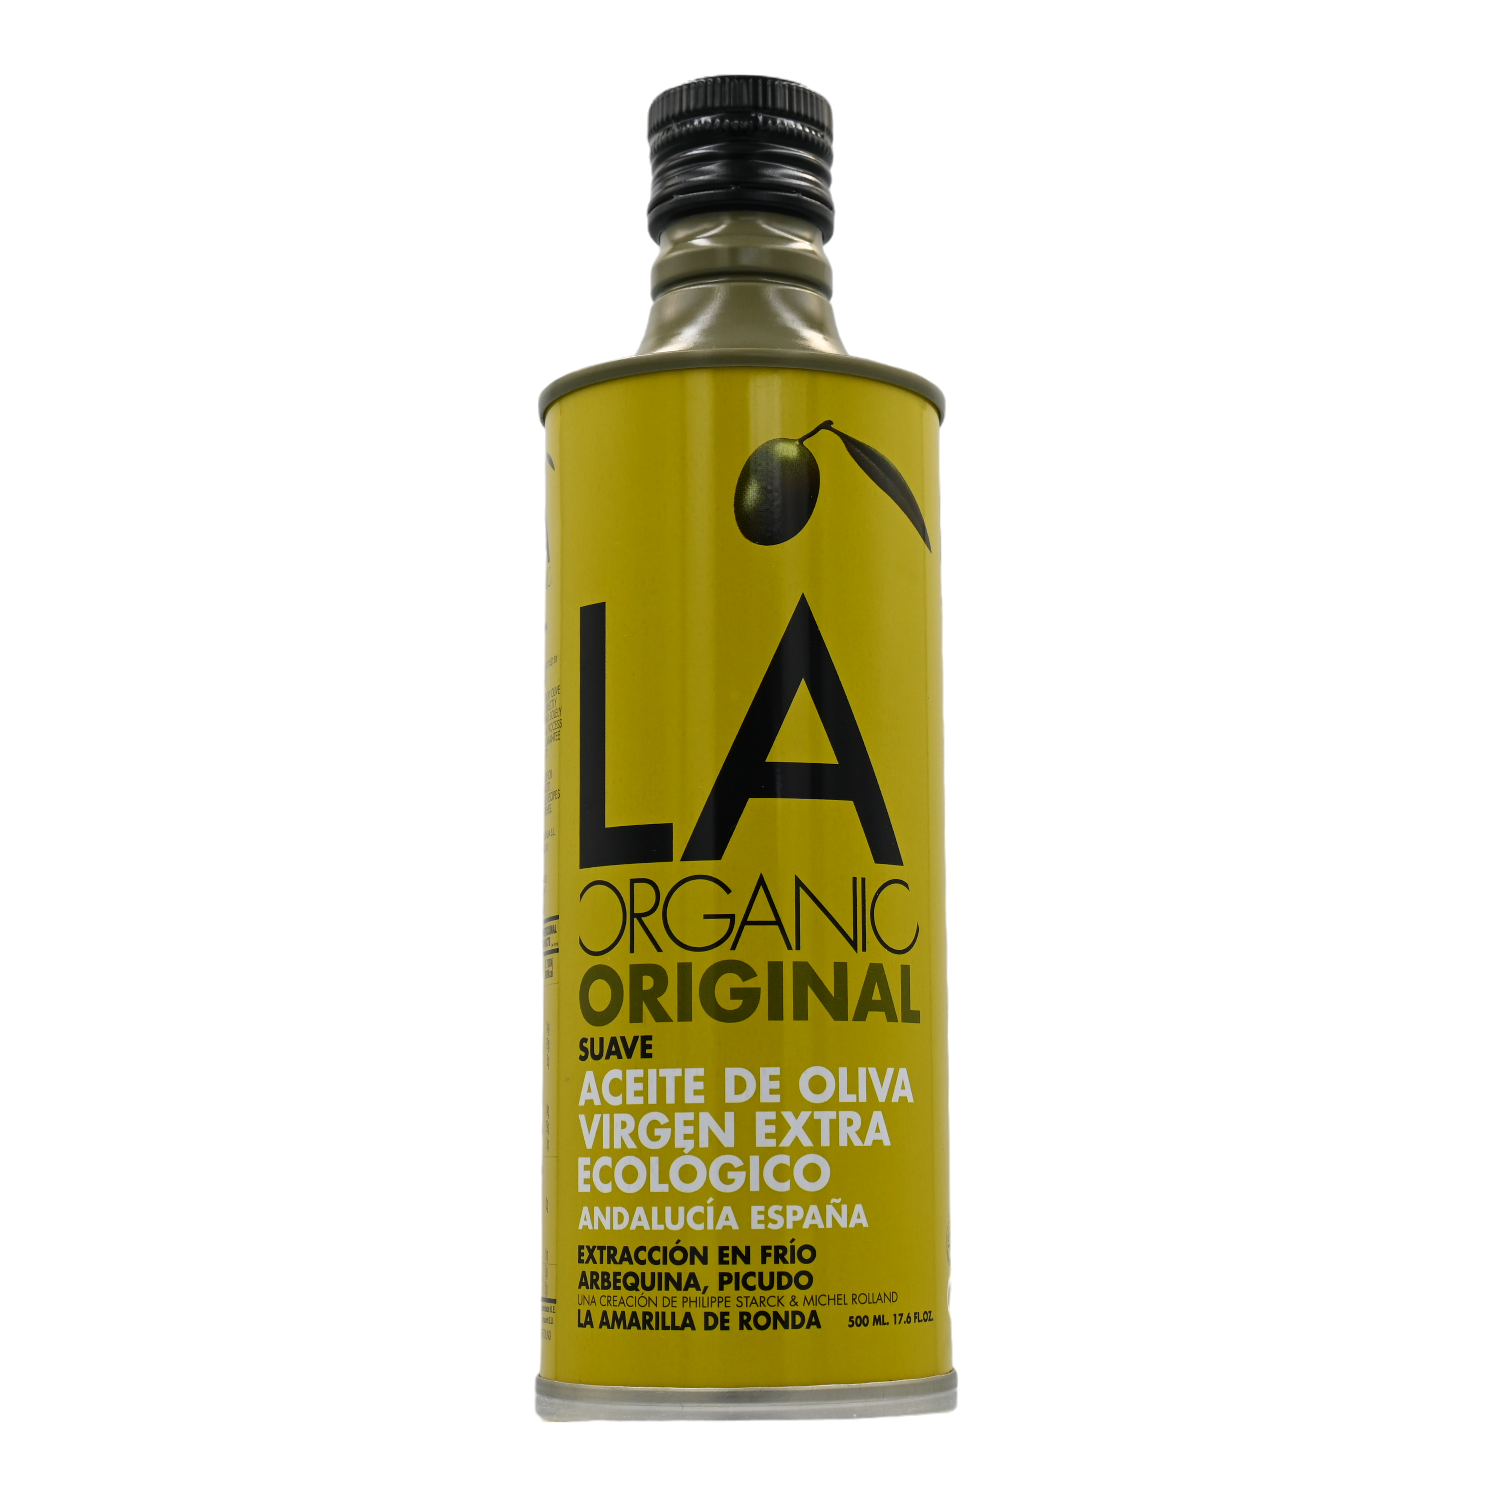 BIO Aceite de oliva virgen extra suave, LA ORGANIC 0,5 l